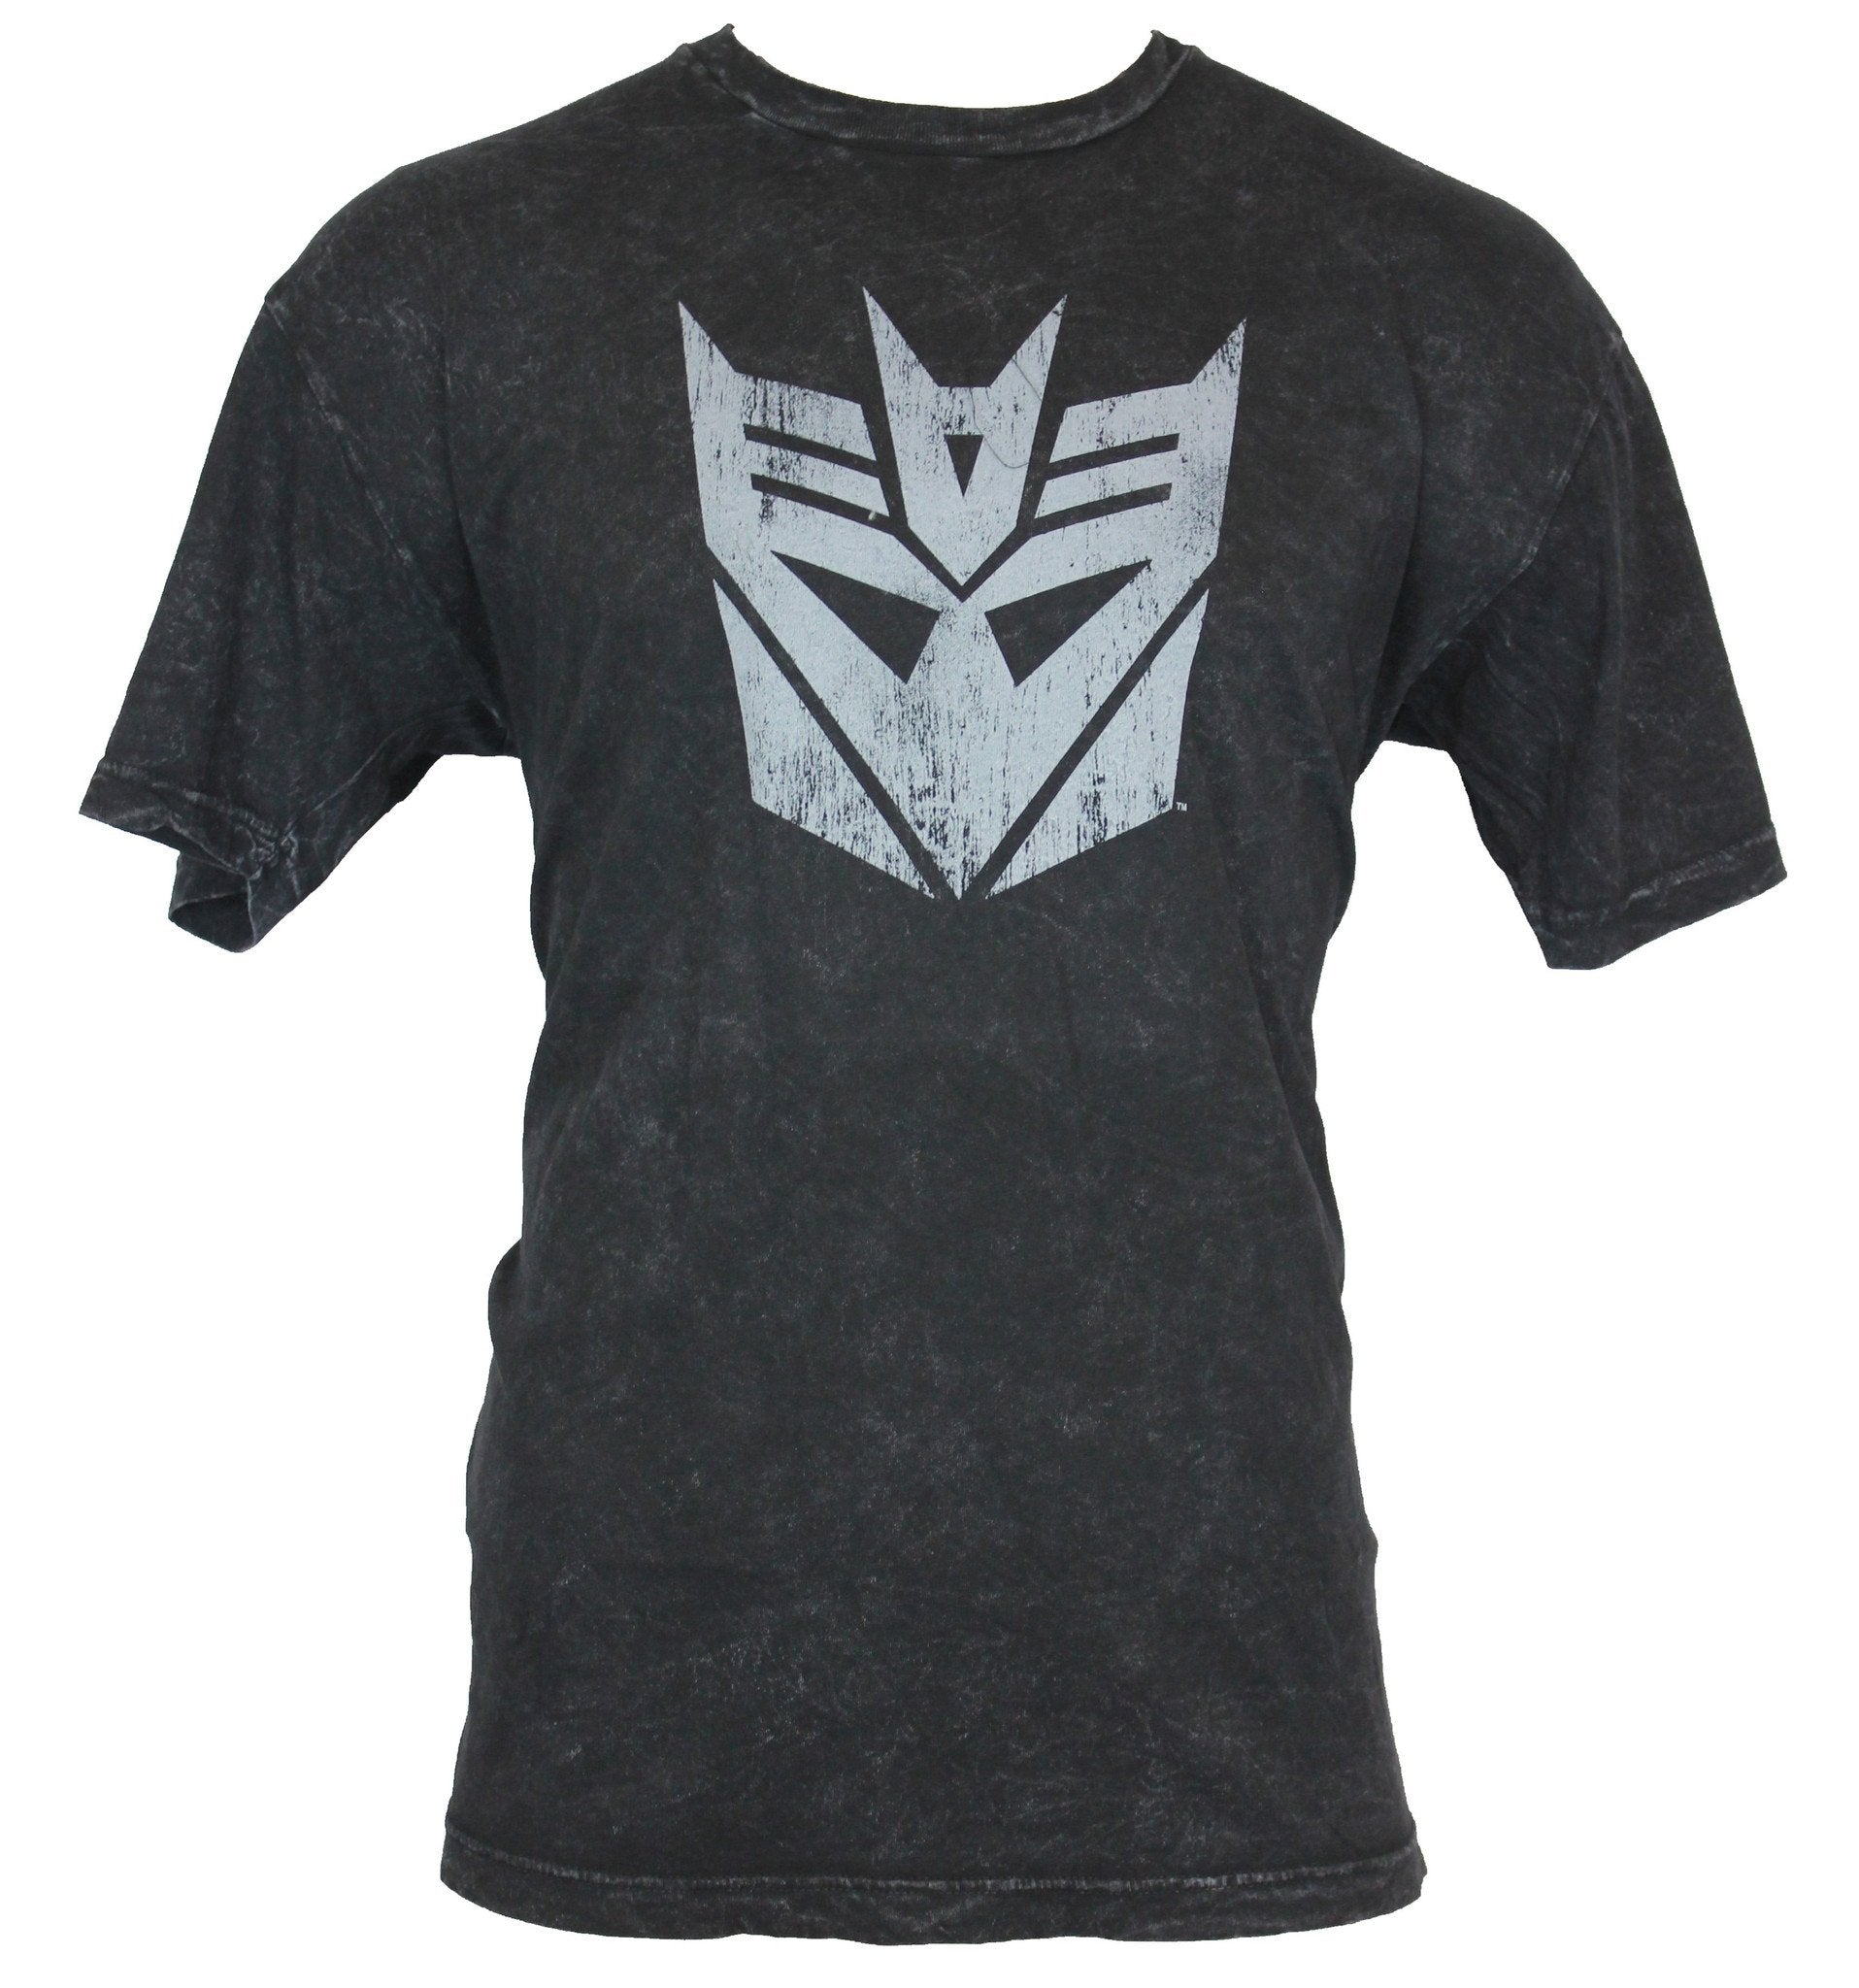 Transformers Mens T-Shirt - Decepticon Logo Distressed Stonewashed Image